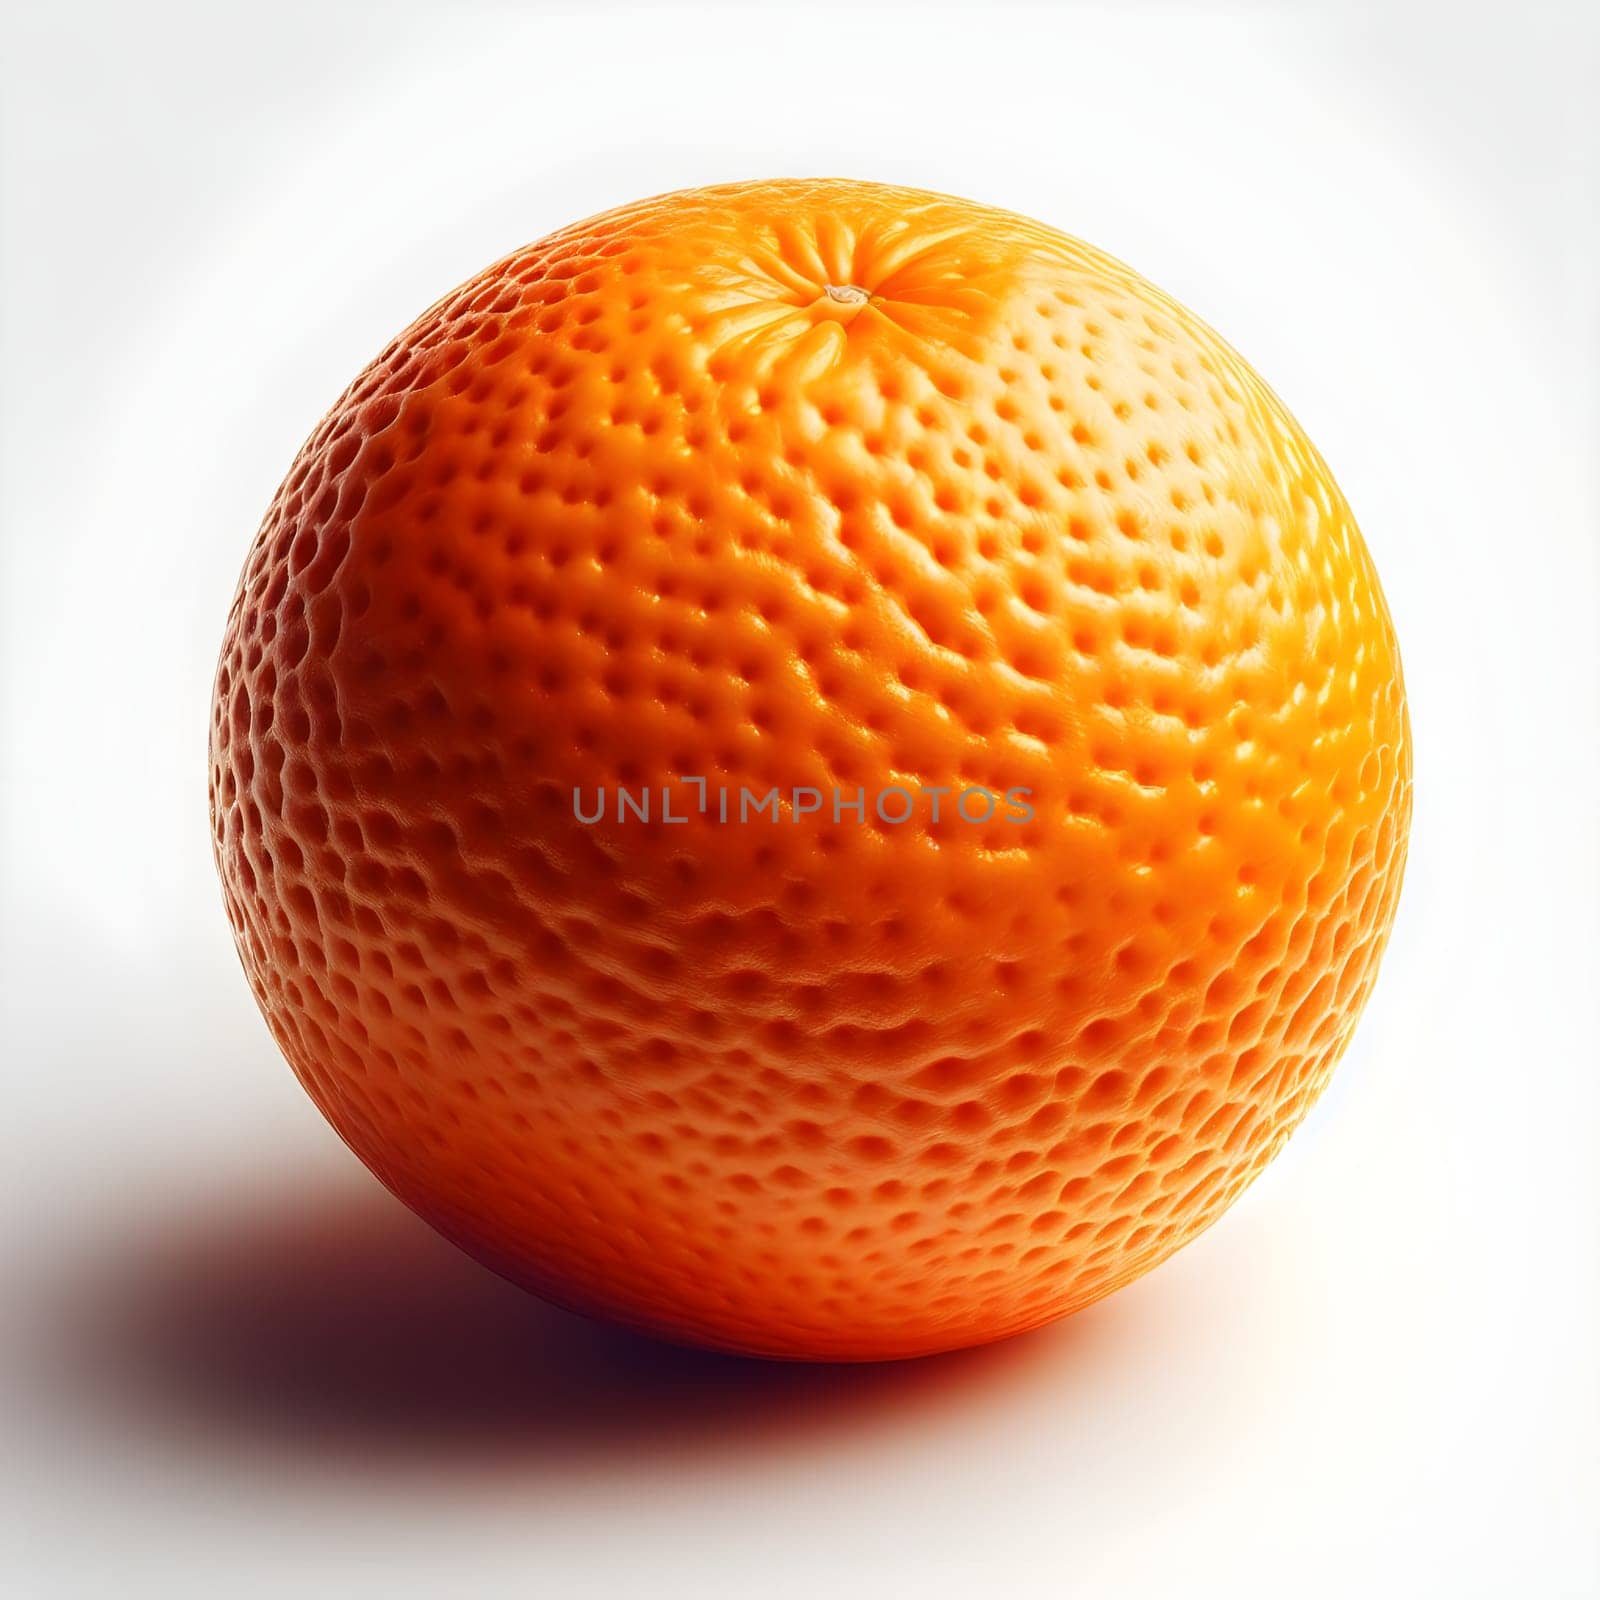 Fresh Orange, close-up isolated on a White background. High quality photo